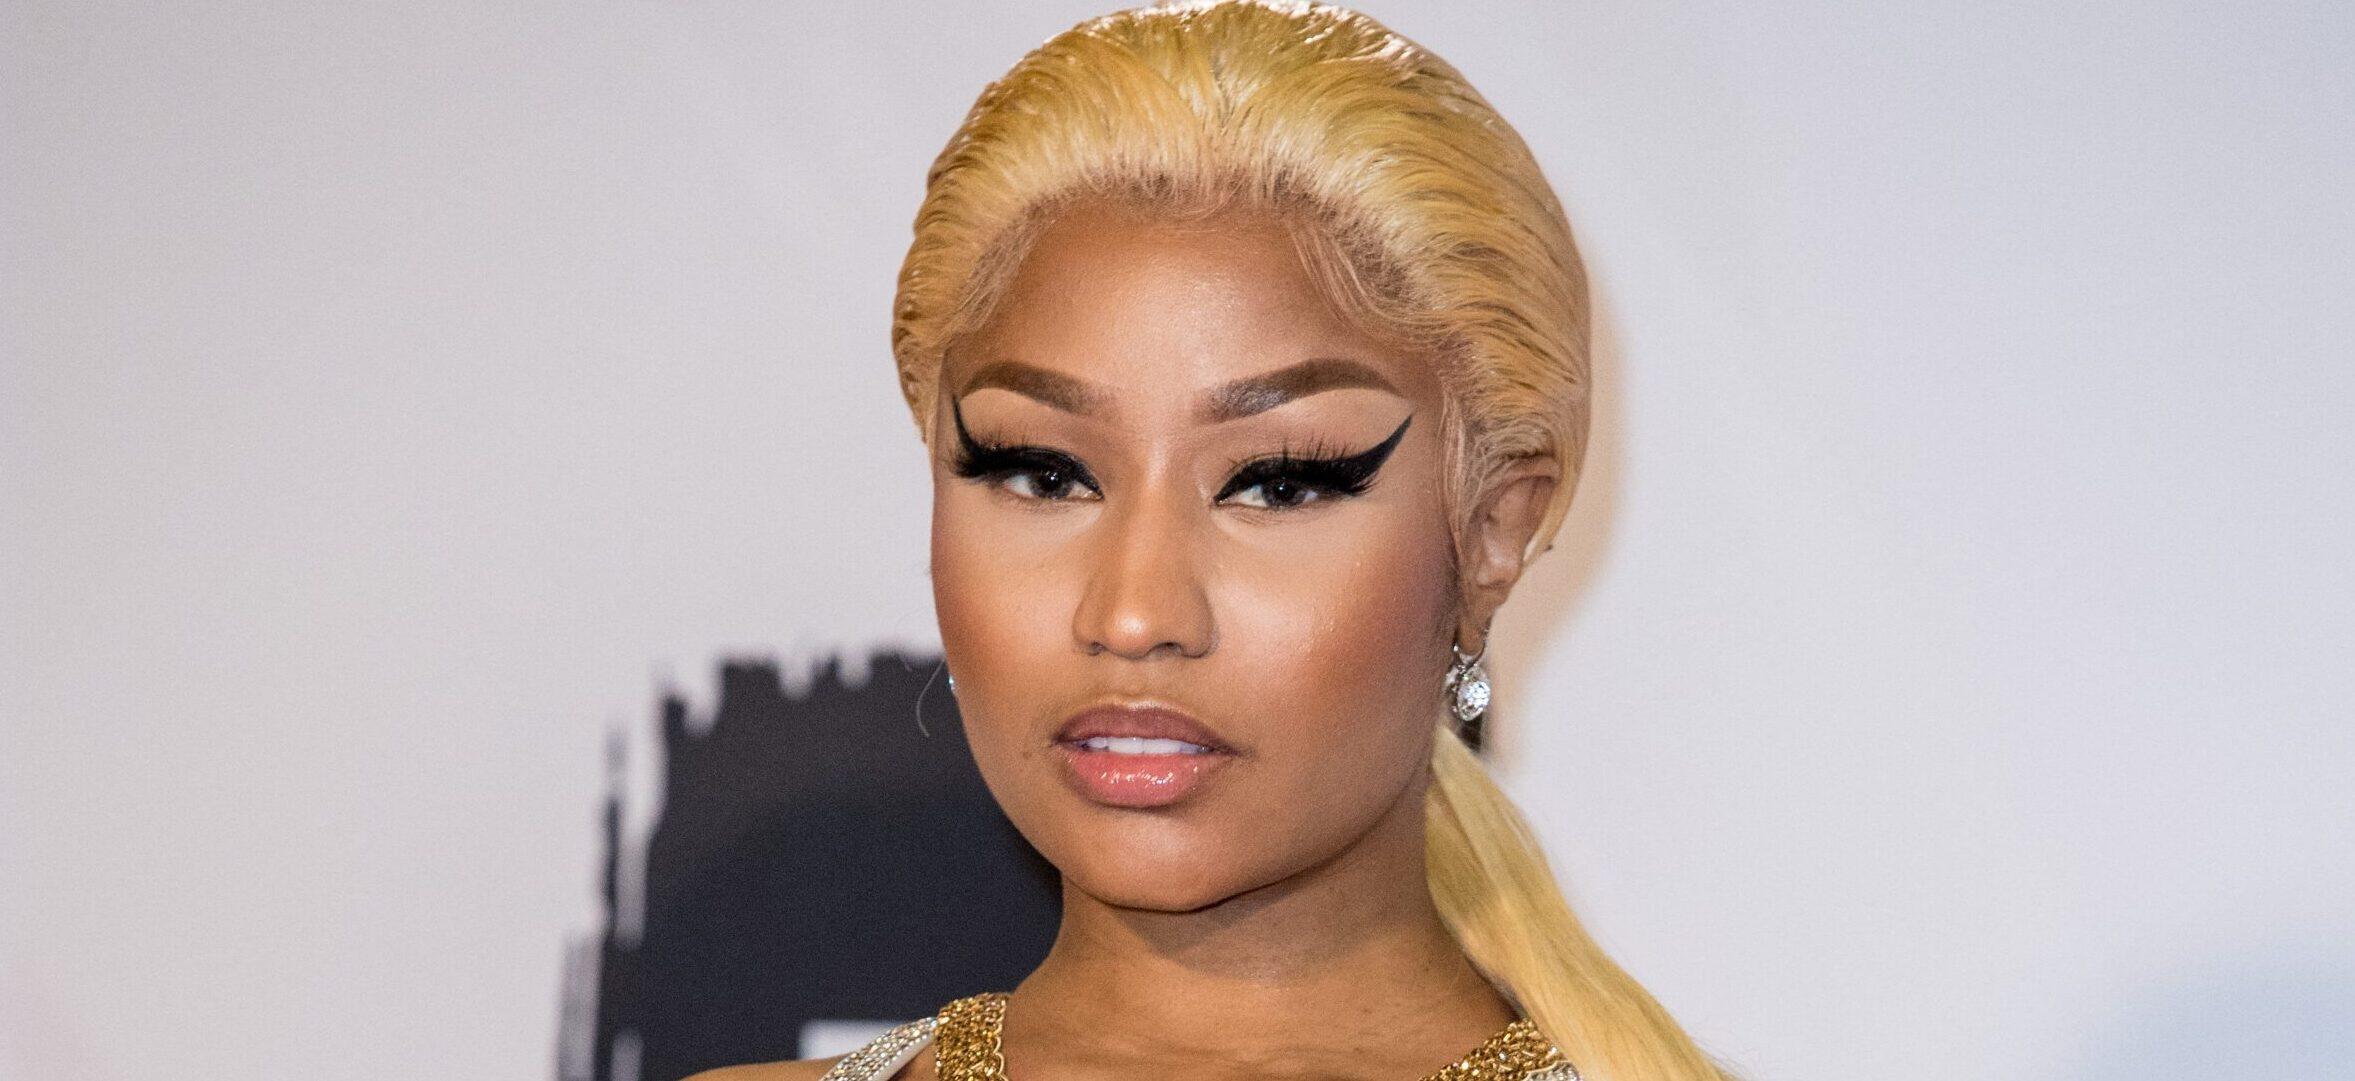 Nicki Minaj Set To Break 5-Year Hiatus With Announcement Of 5th Studio Album